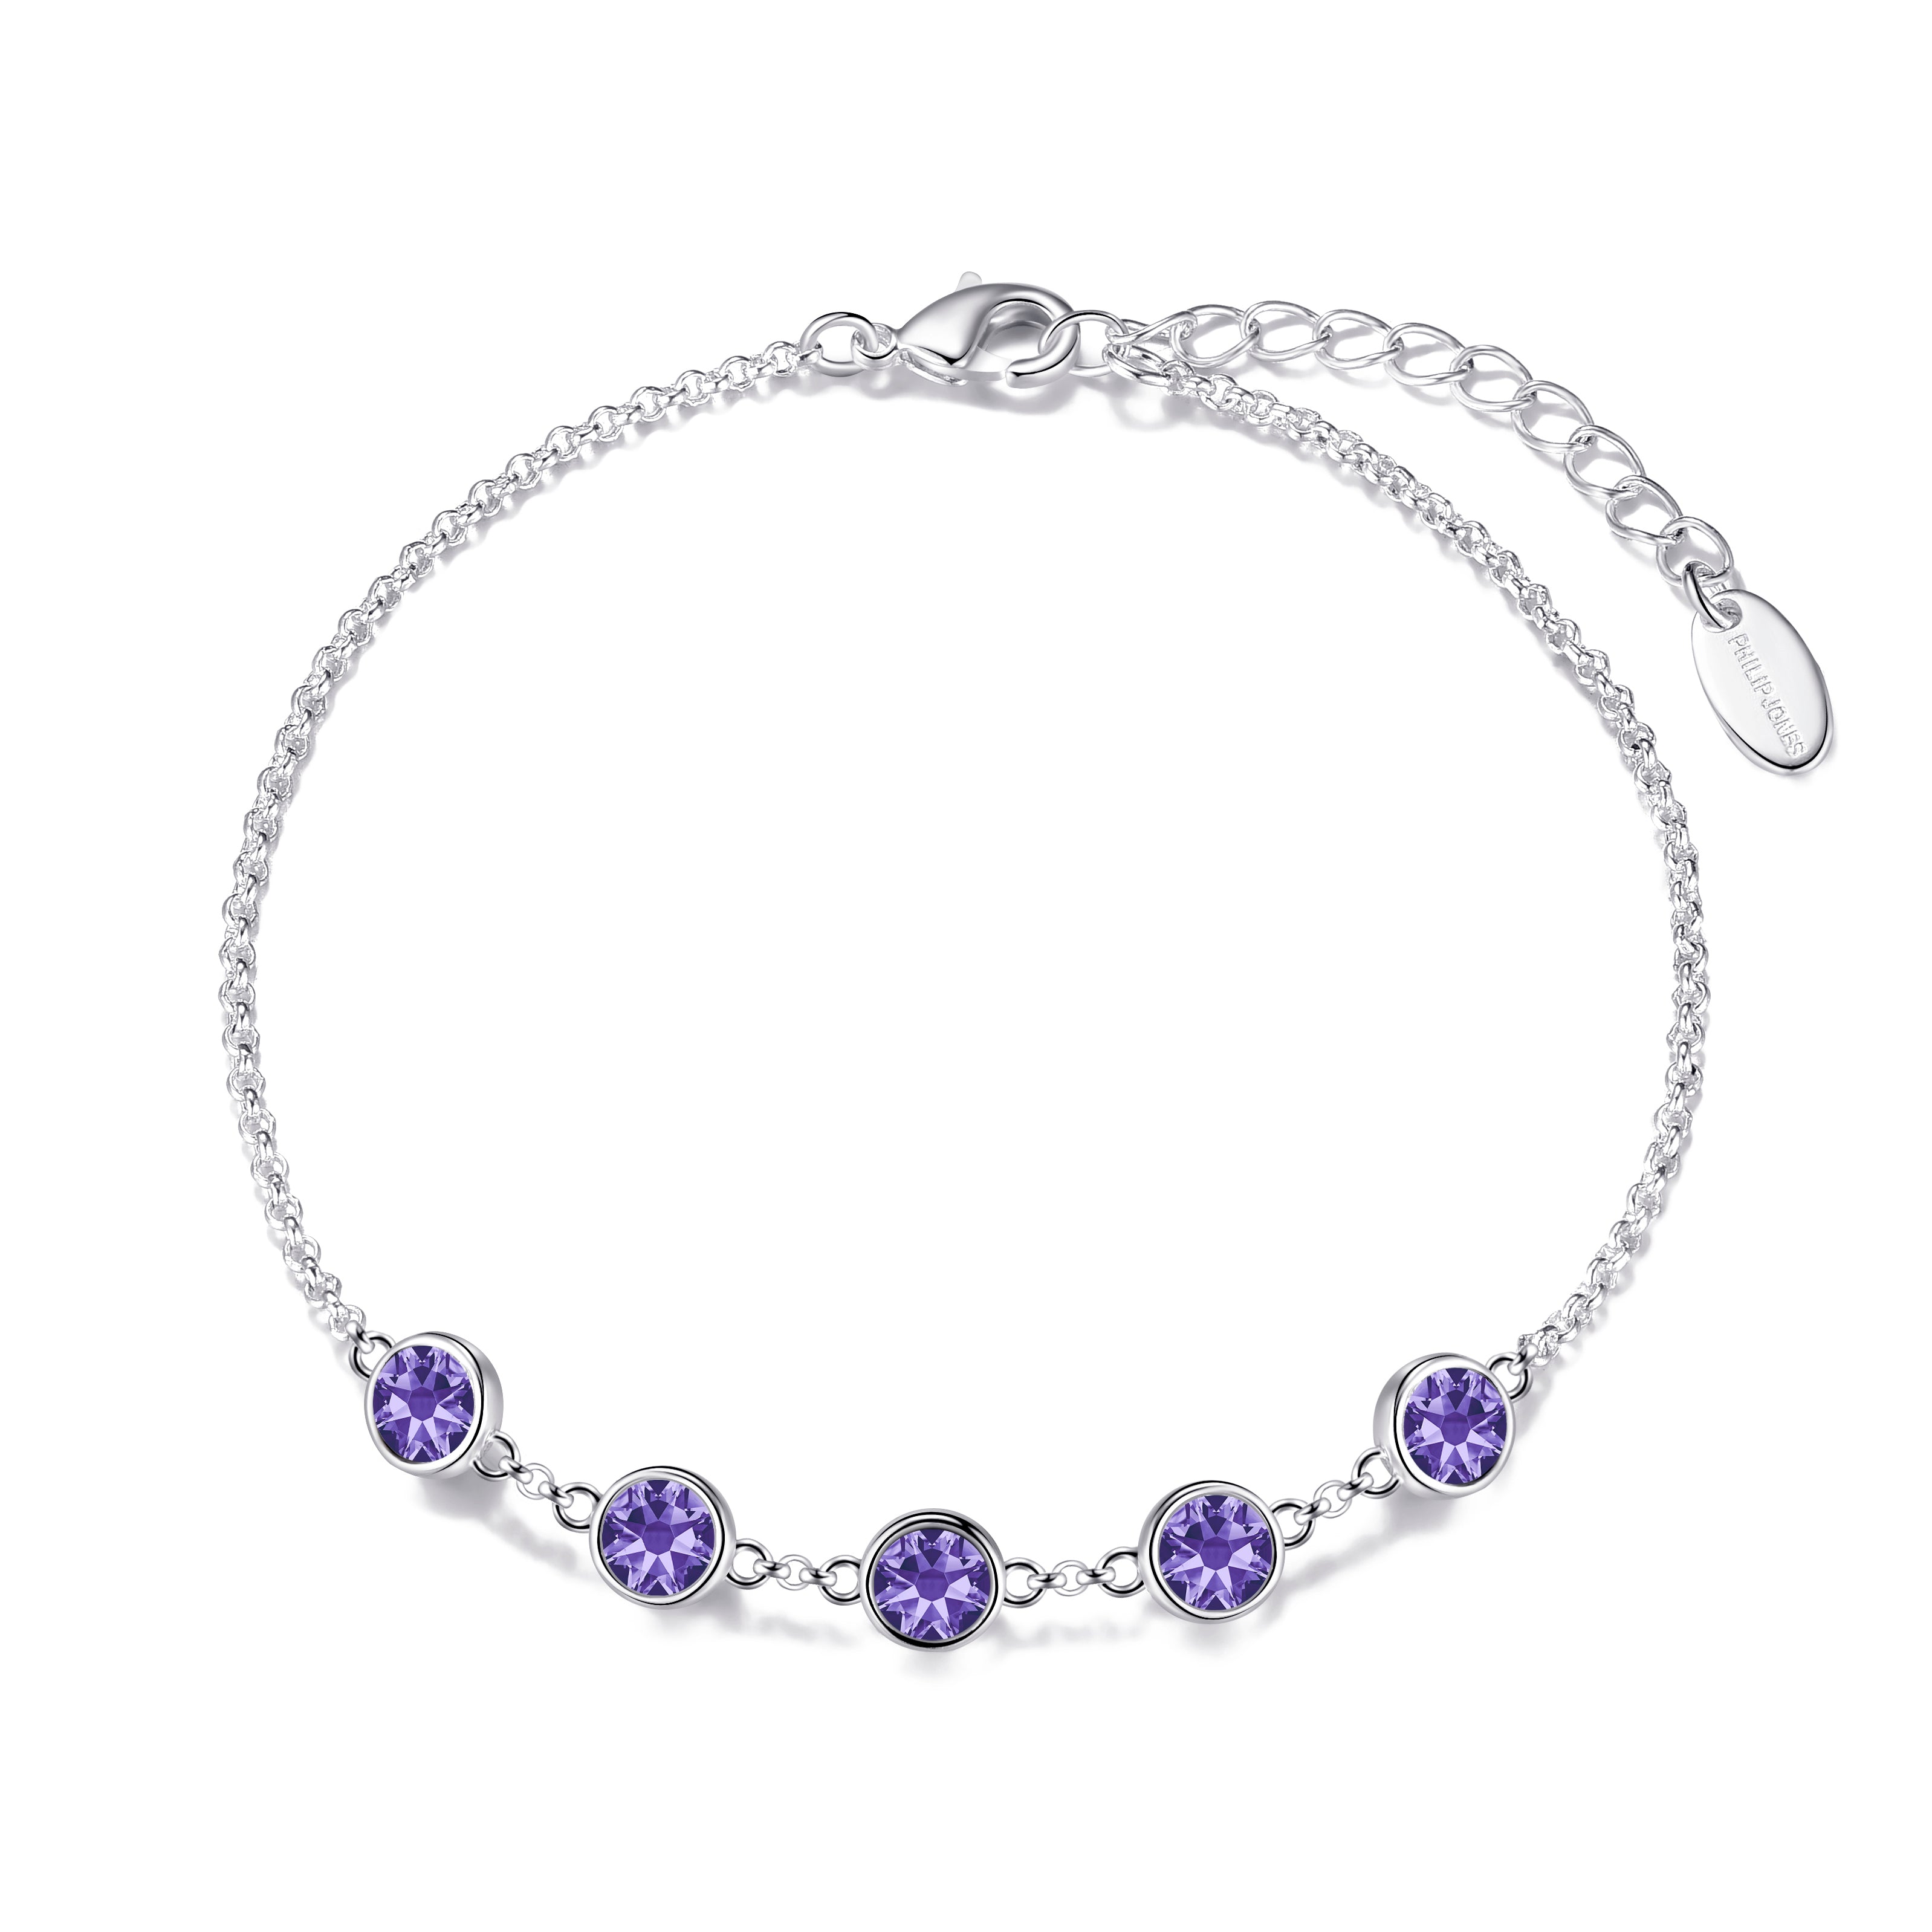 Light Purple Crystal Chain Bracelet Created with Zircondia® Crystals by Philip Jones Jewellery